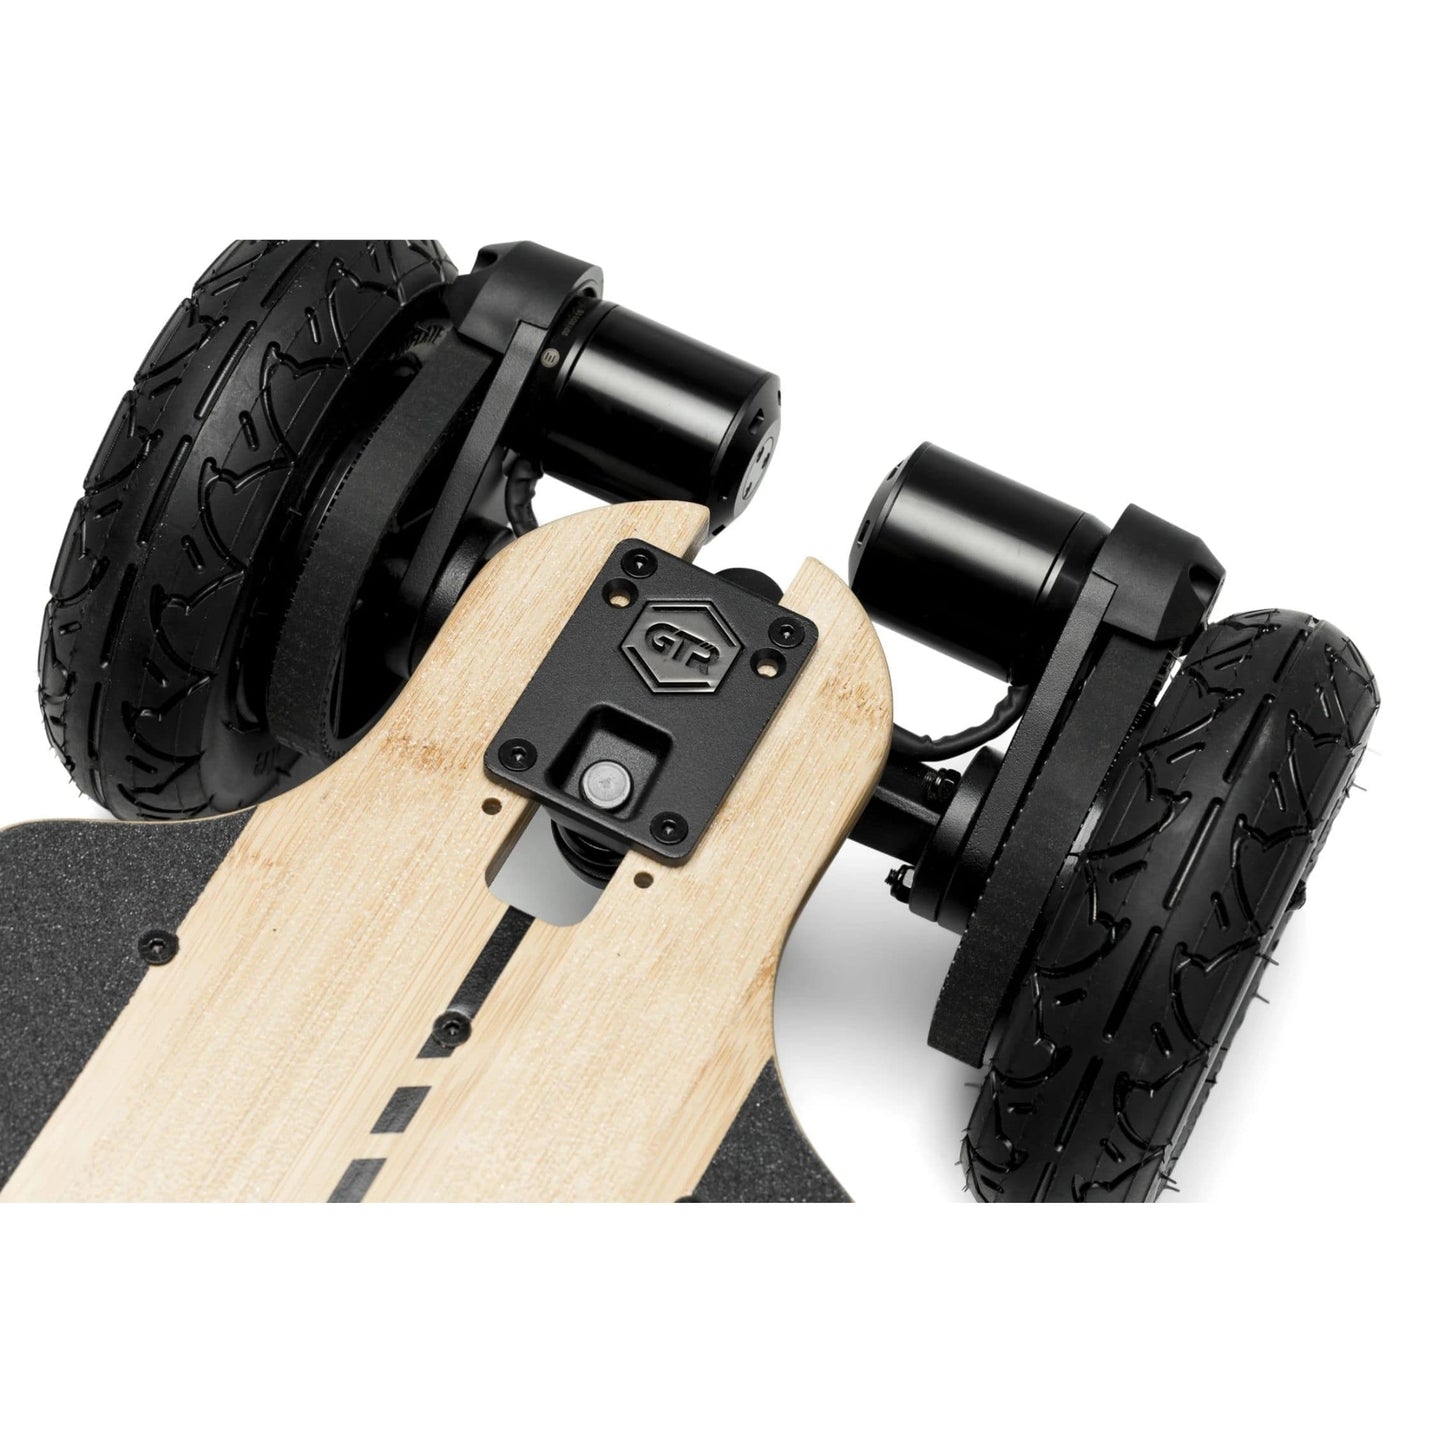 Evolve Bamboo GTR AT Electric Skateboard